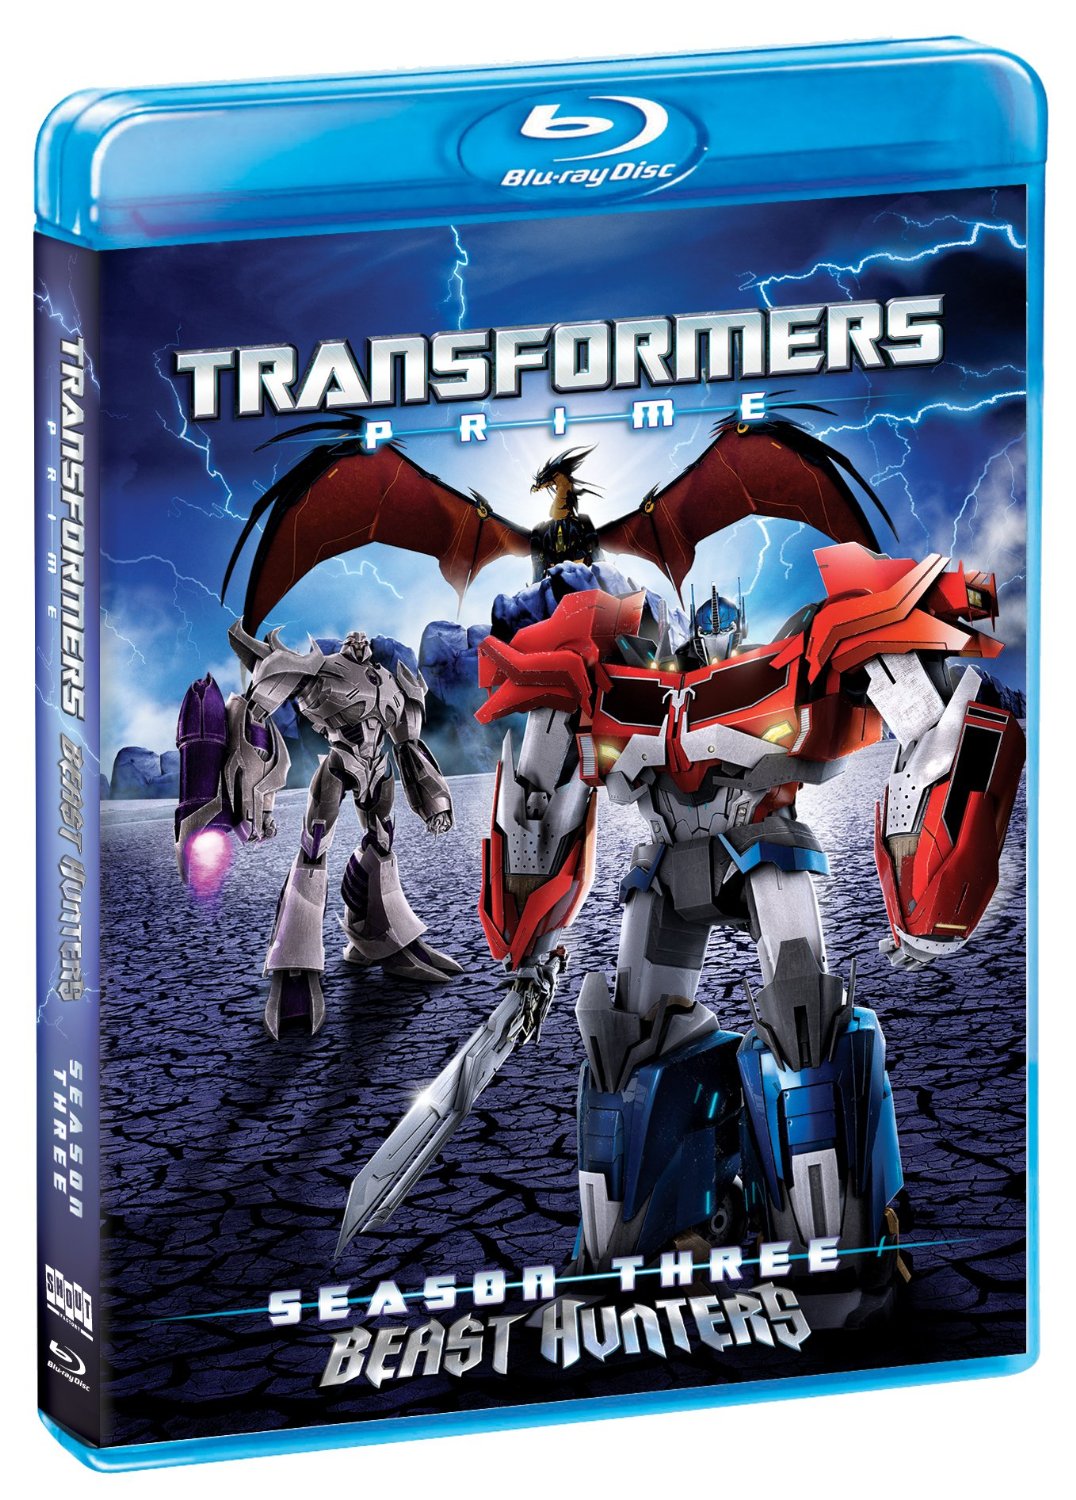 Re: Transformers Prime Season Three DVD Release Date, 12/03/13